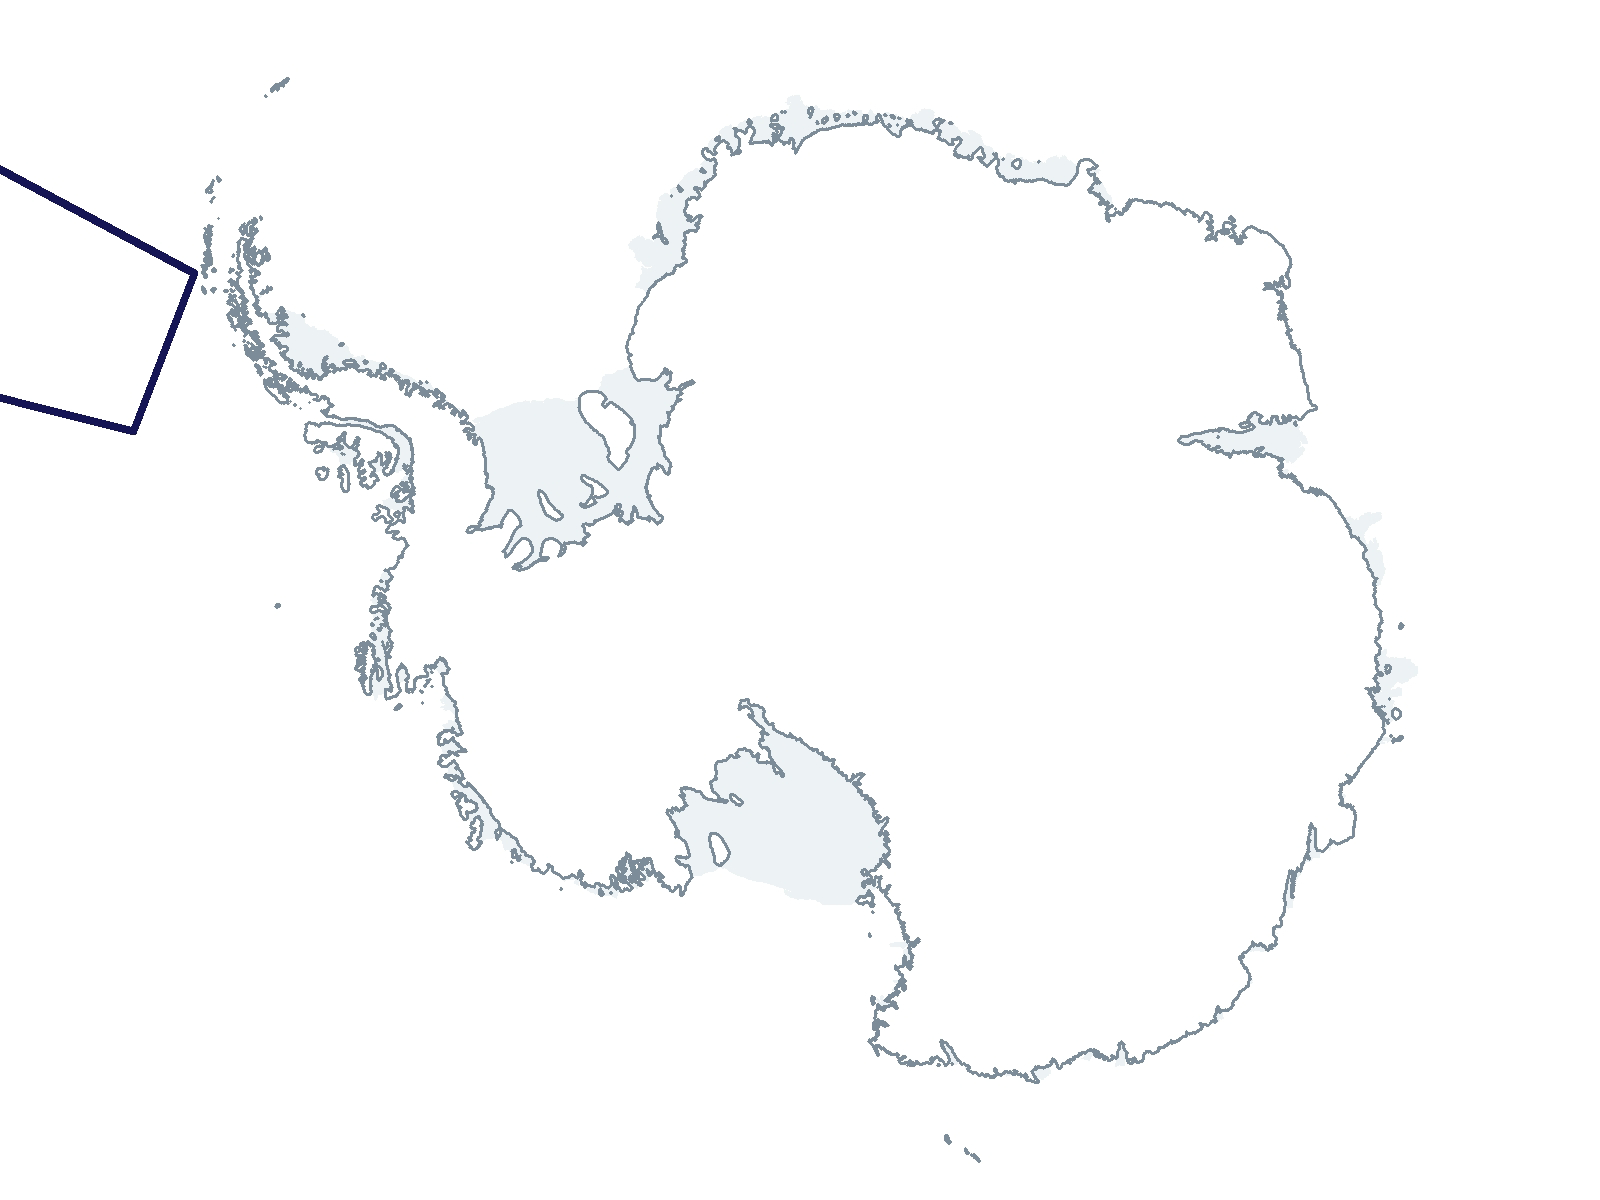 O-317-L Research Location(s): Drake Passage